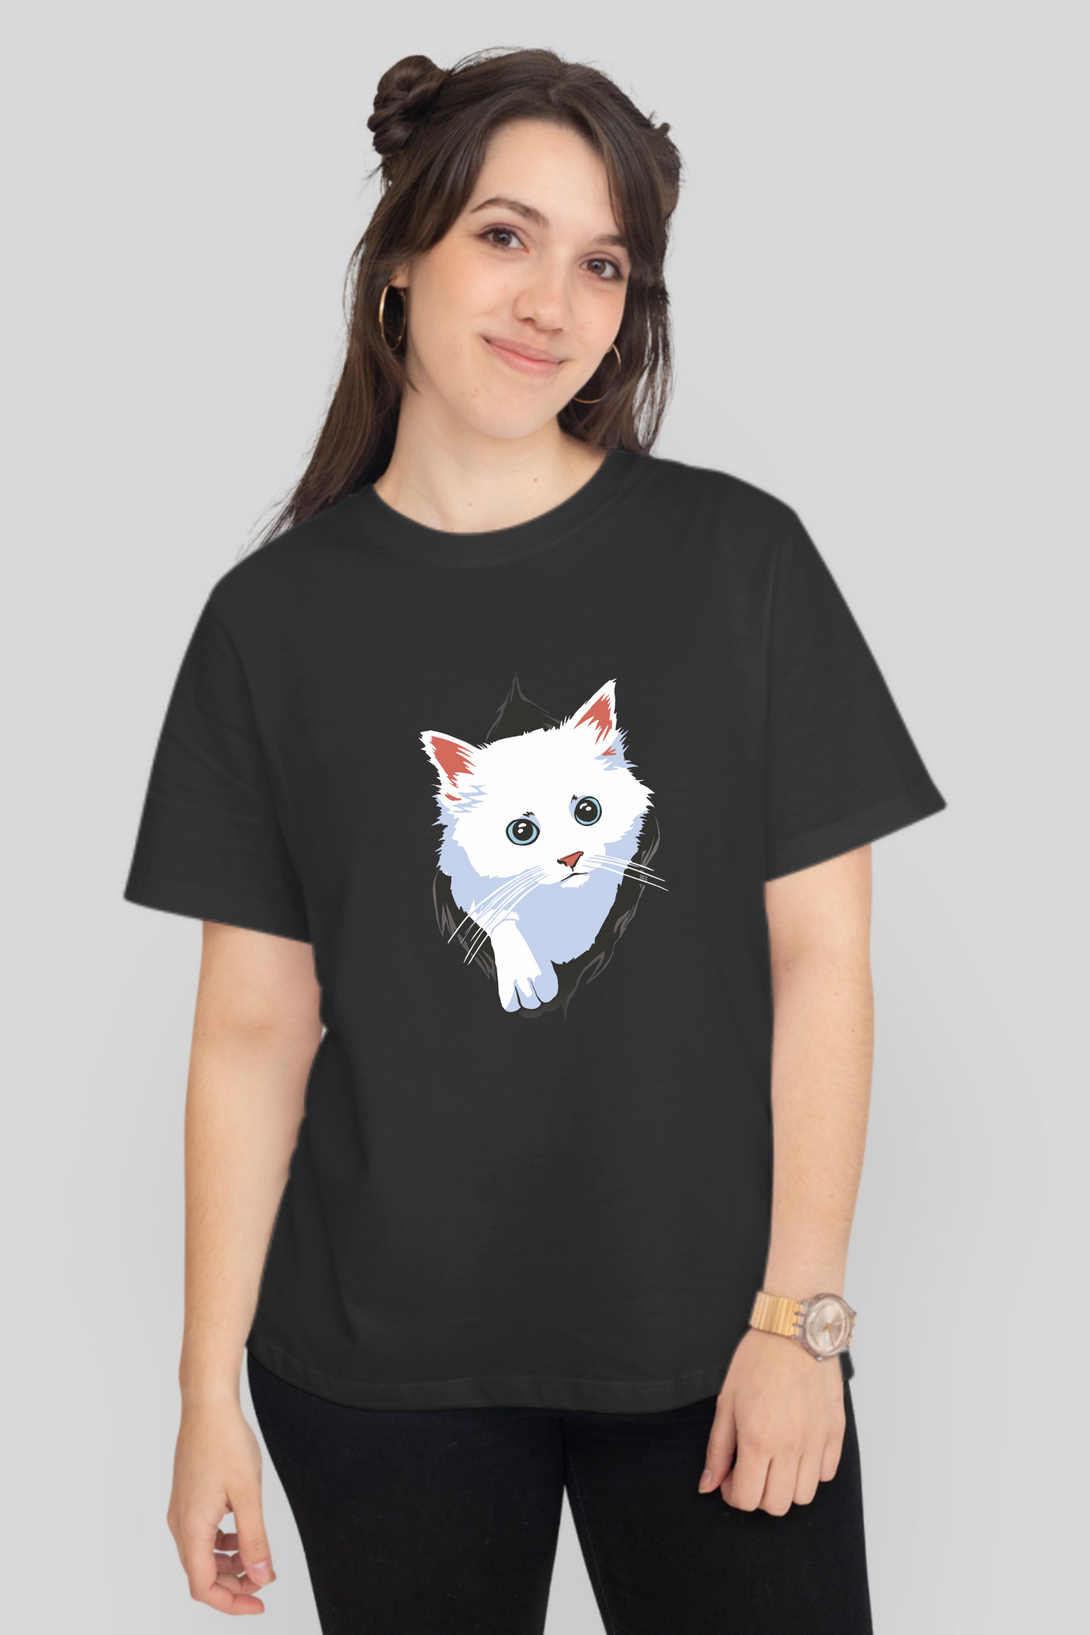 White Cat Printed T-Shirt For Women - WowWaves - 9